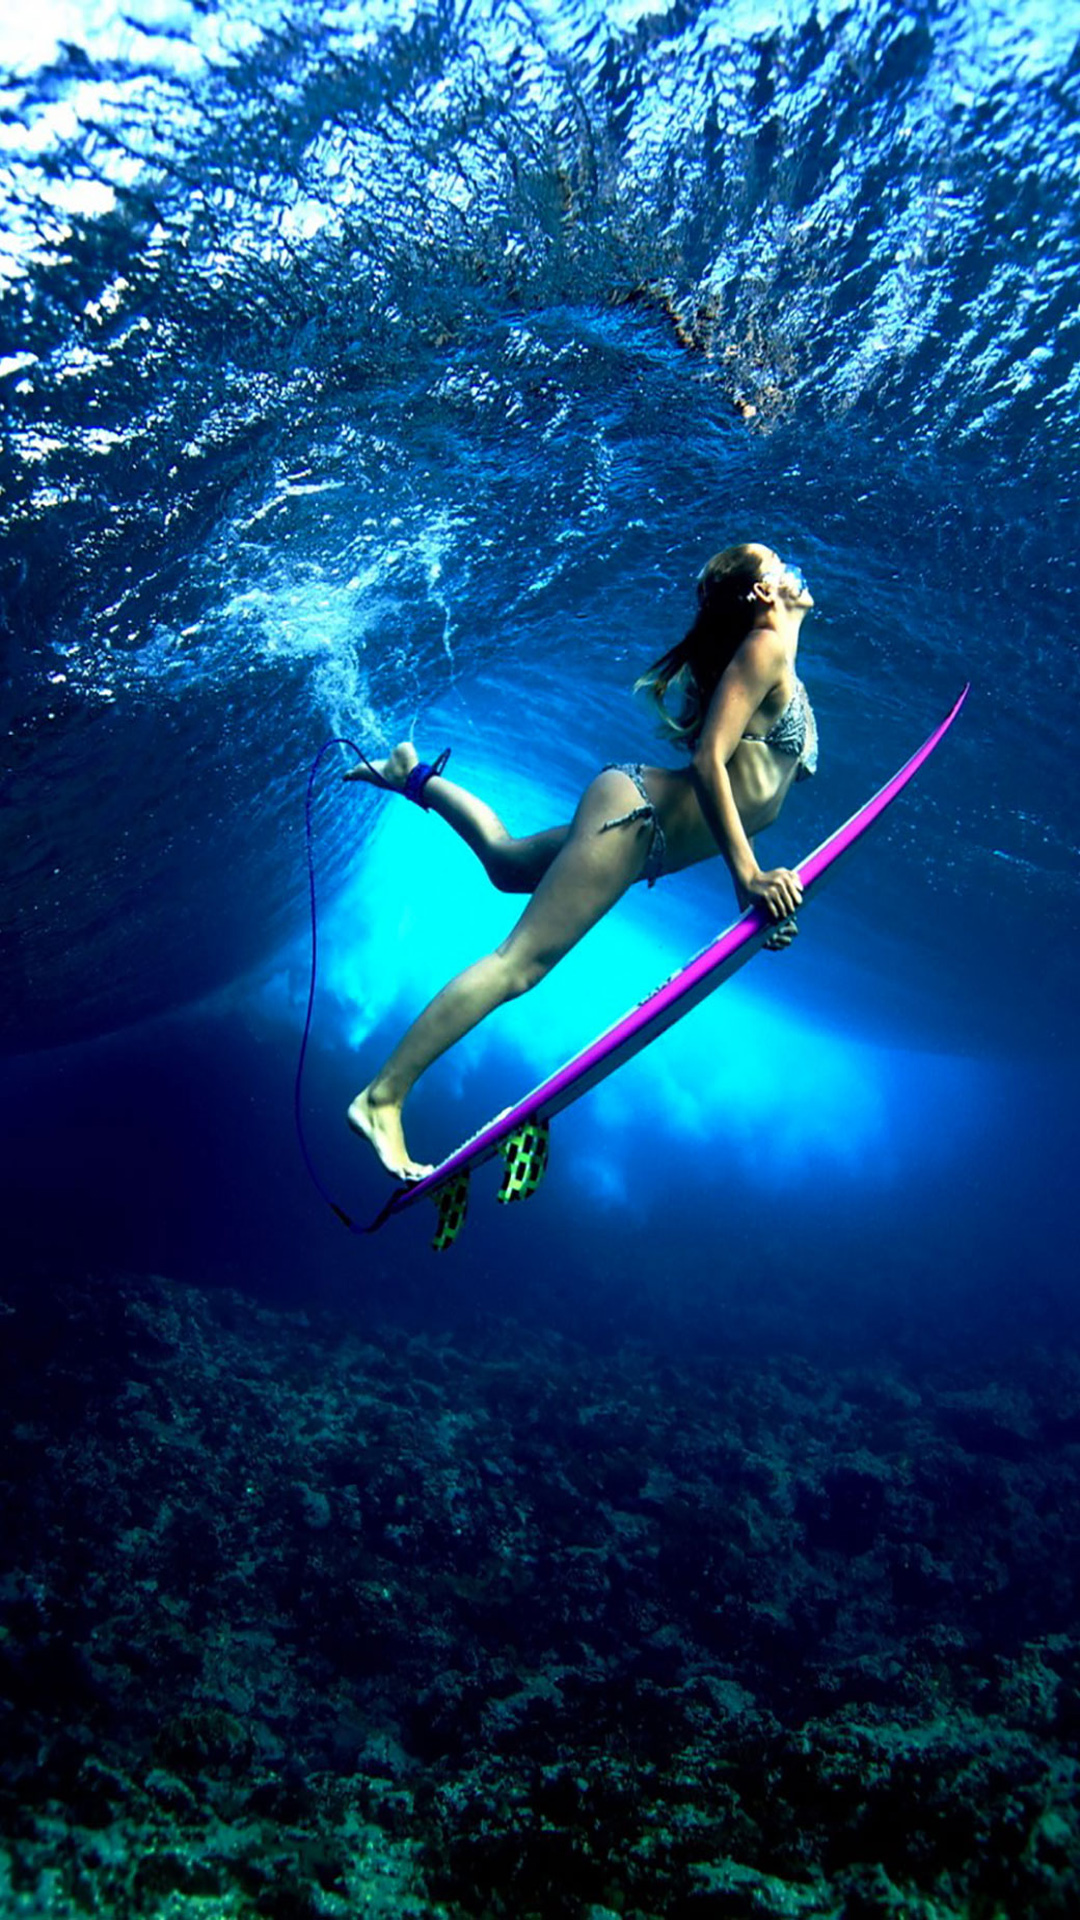 Bikini Hot girl swim under water iphone 4s wallpapers